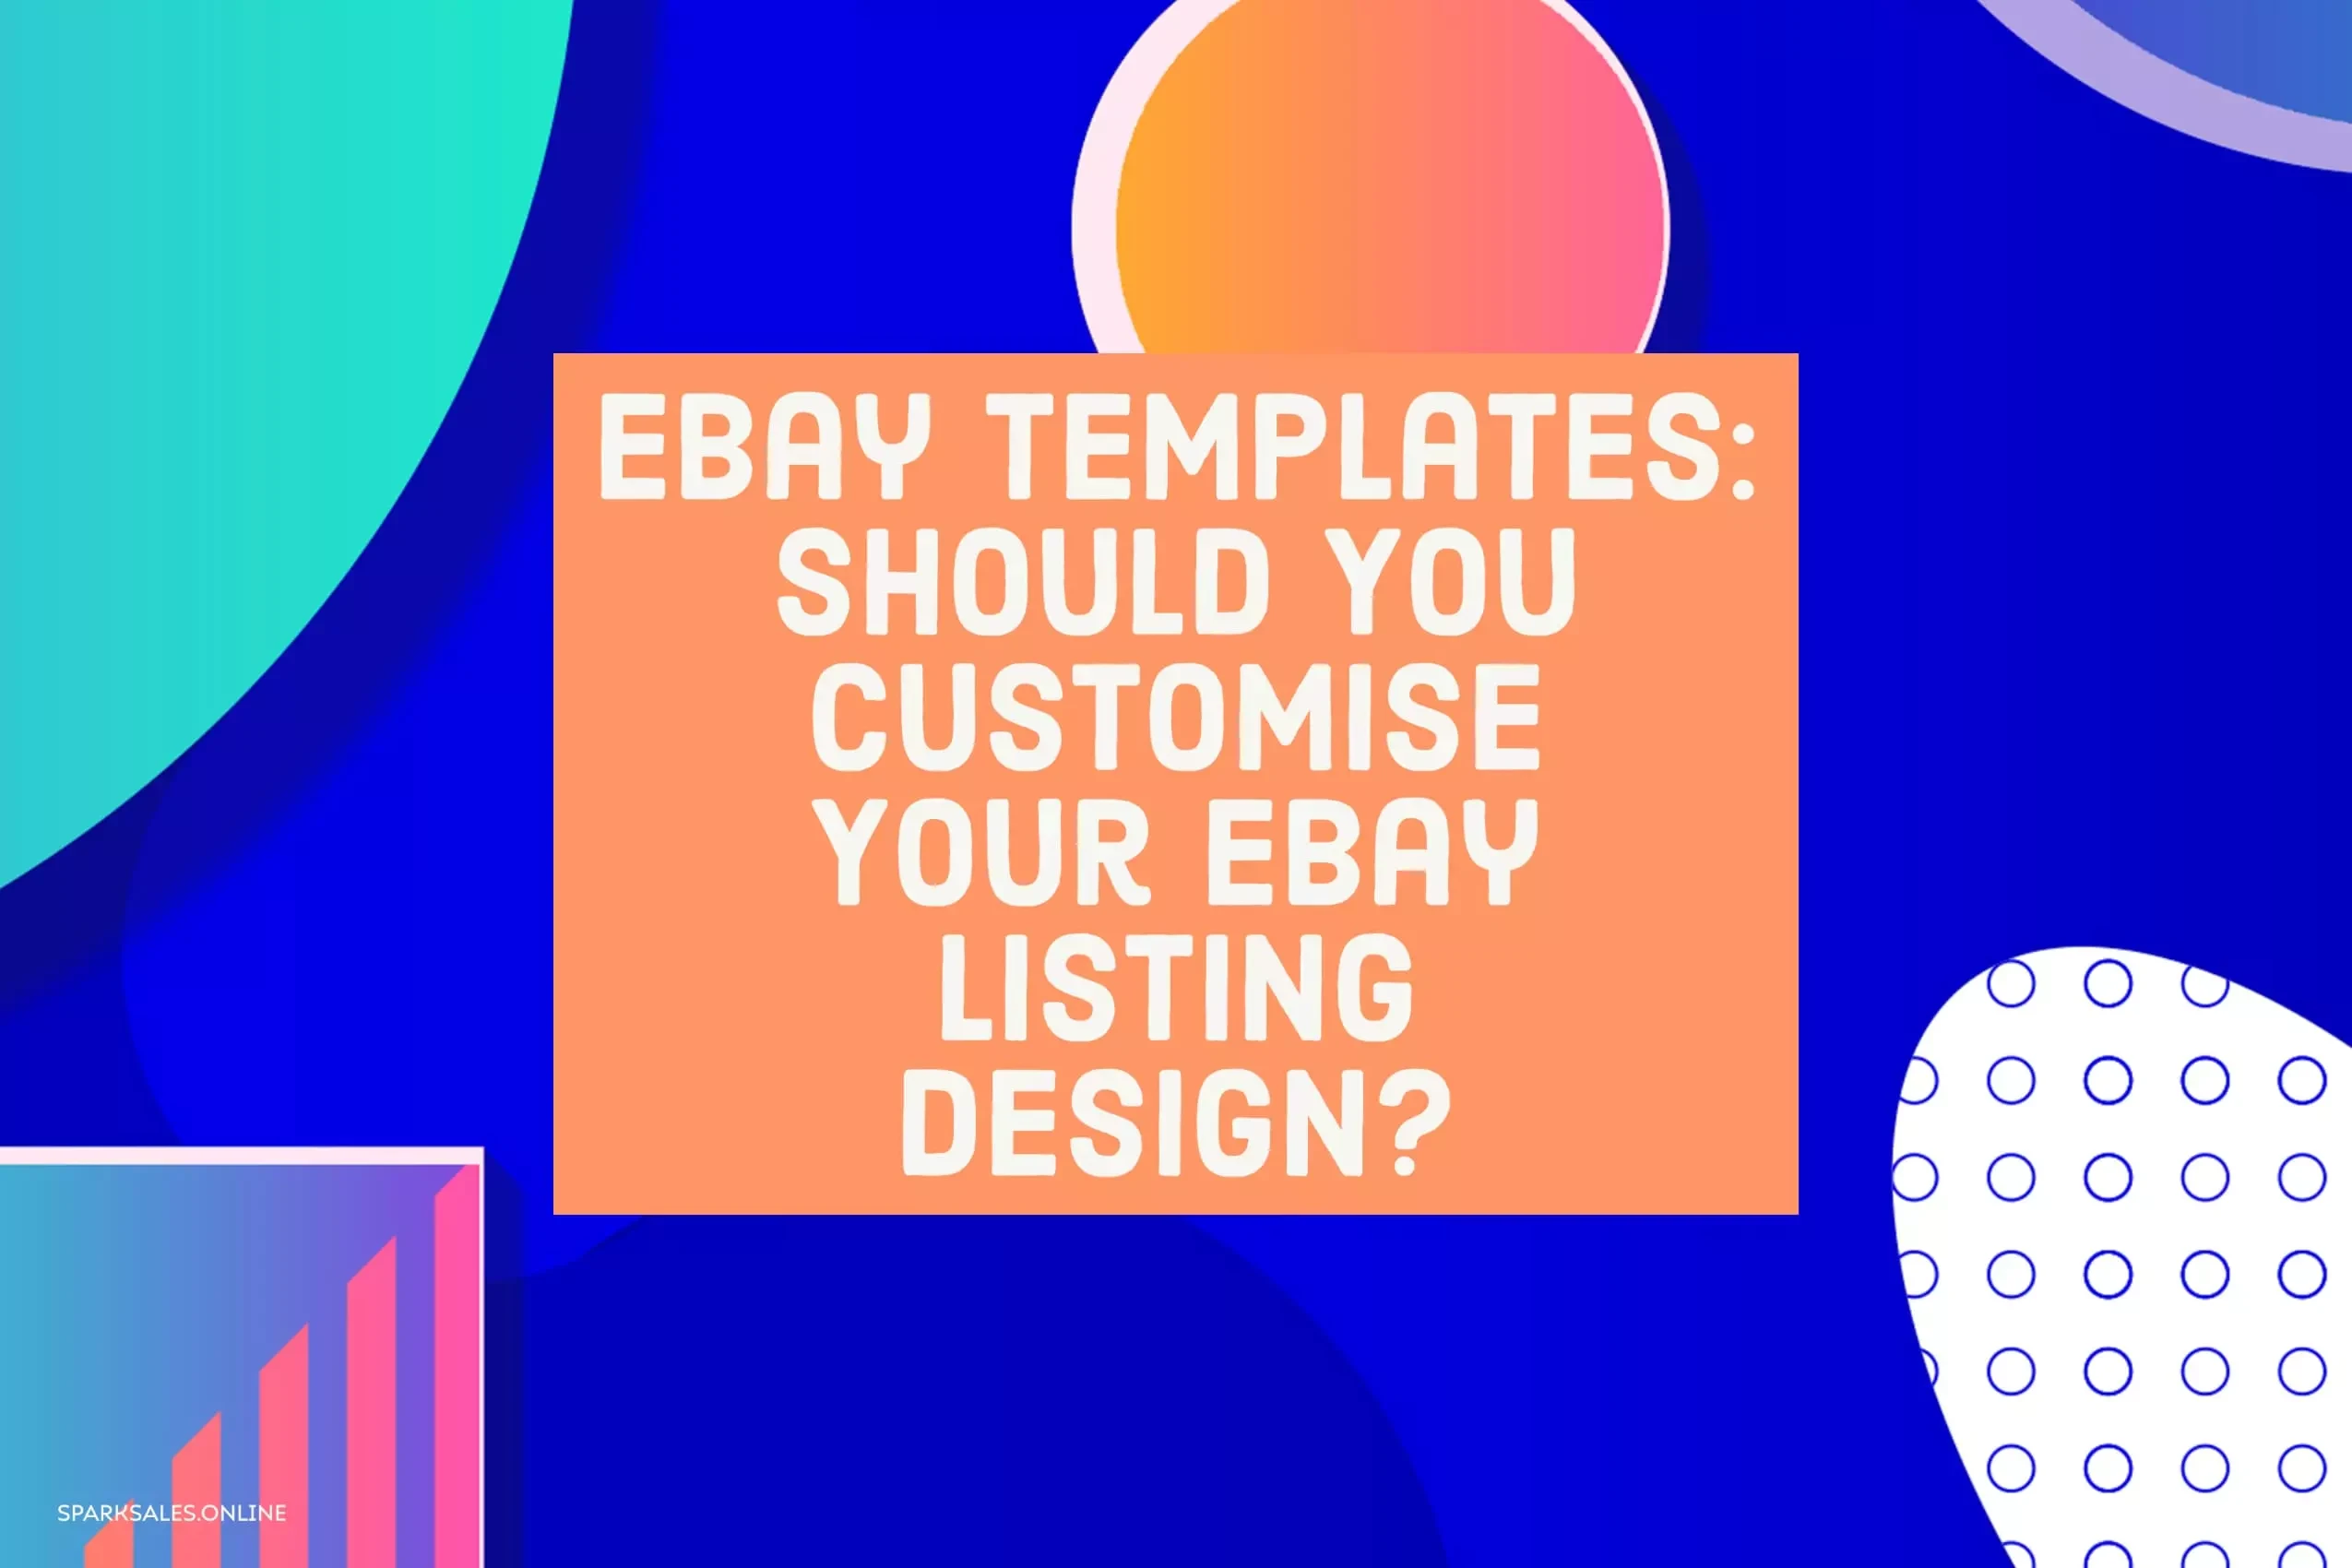 eBay Templates: Should You Customise Your eBay Listing Design?